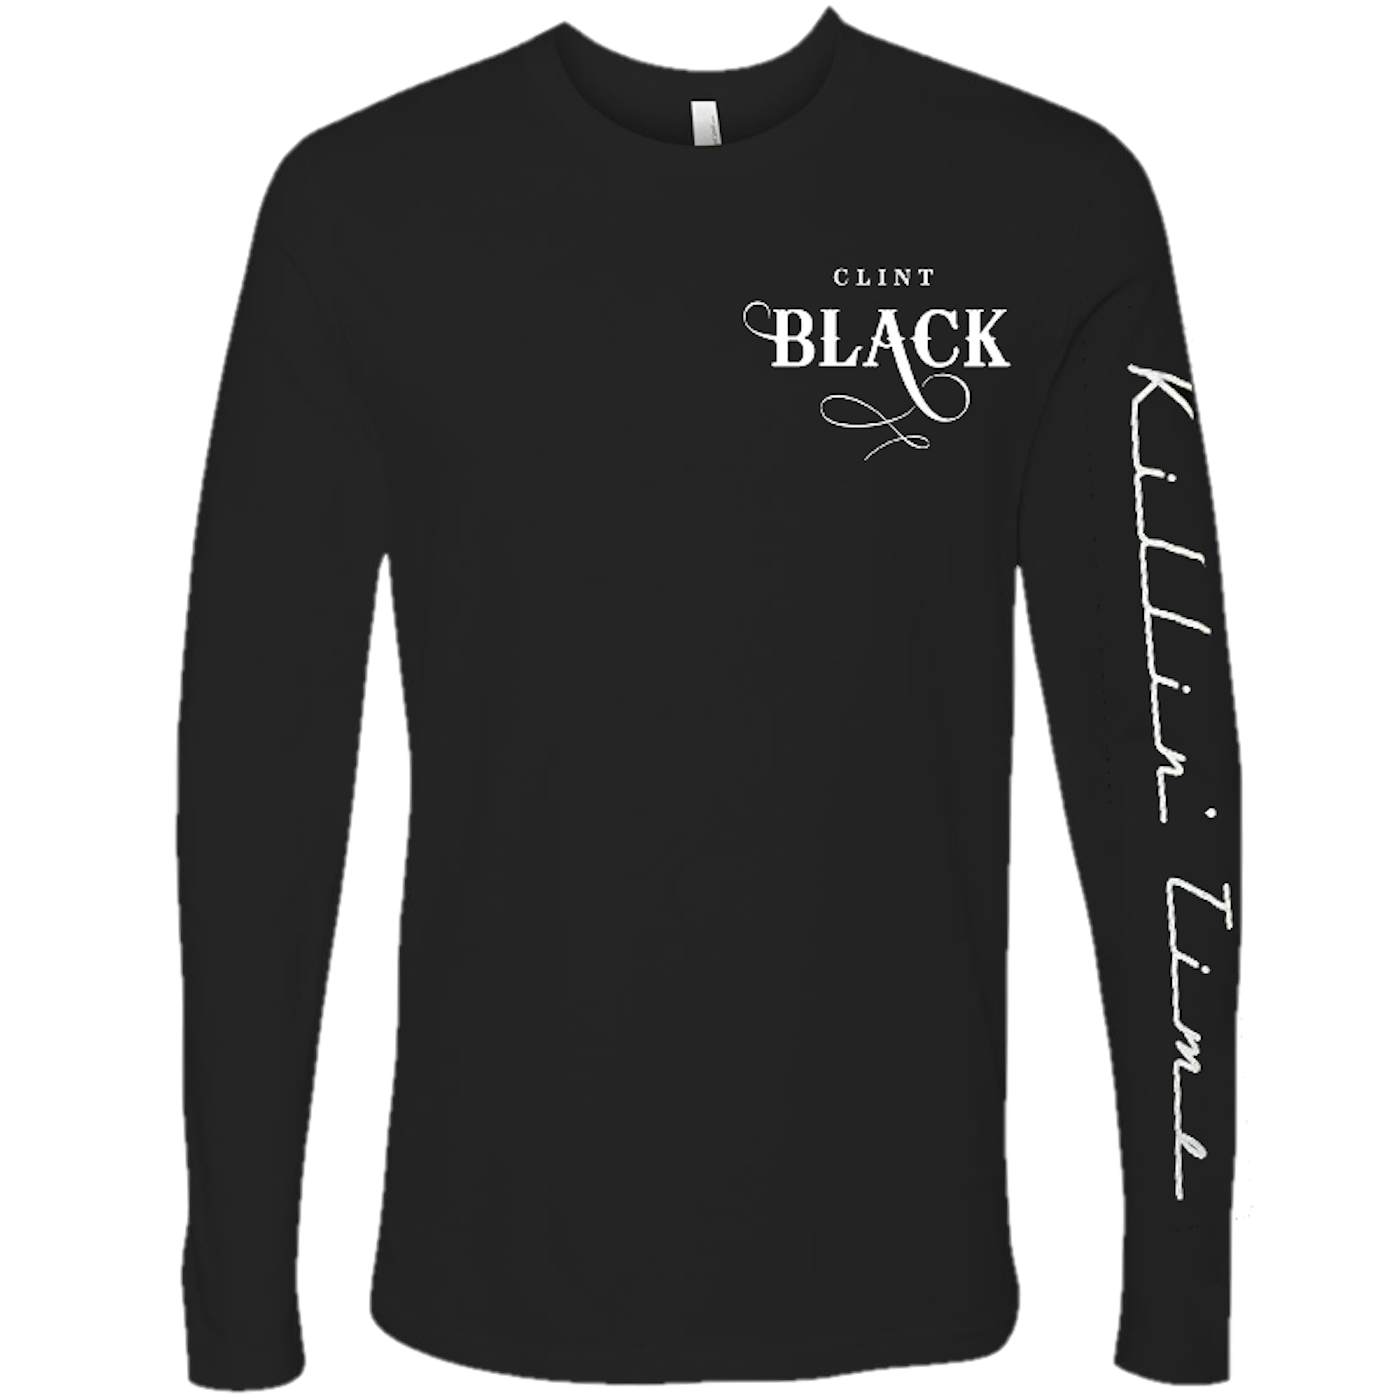 Clint Black Long Sleeve Black Logo Tee